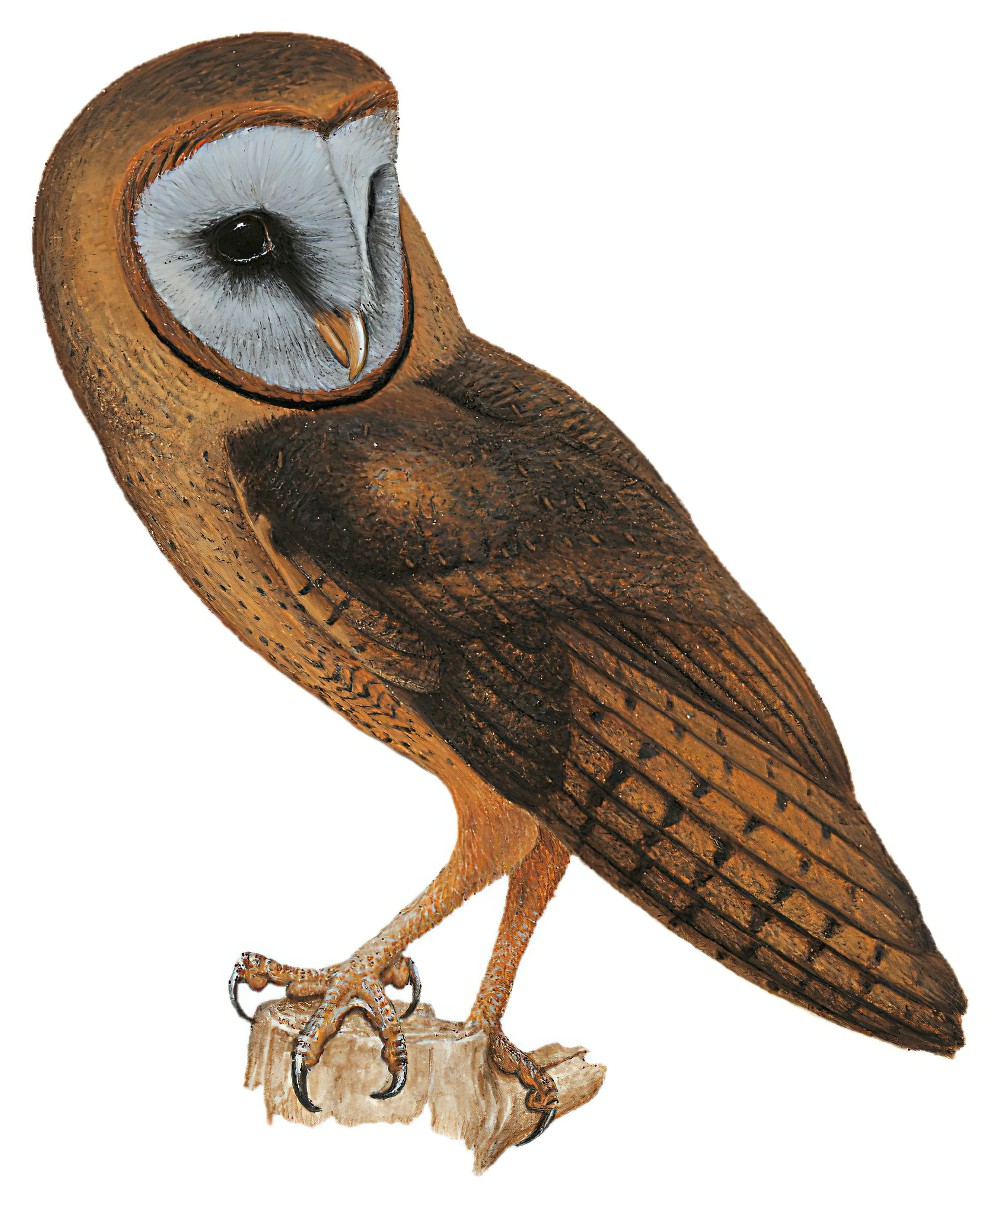 Ashy-faced Owl / Tyto glaucops